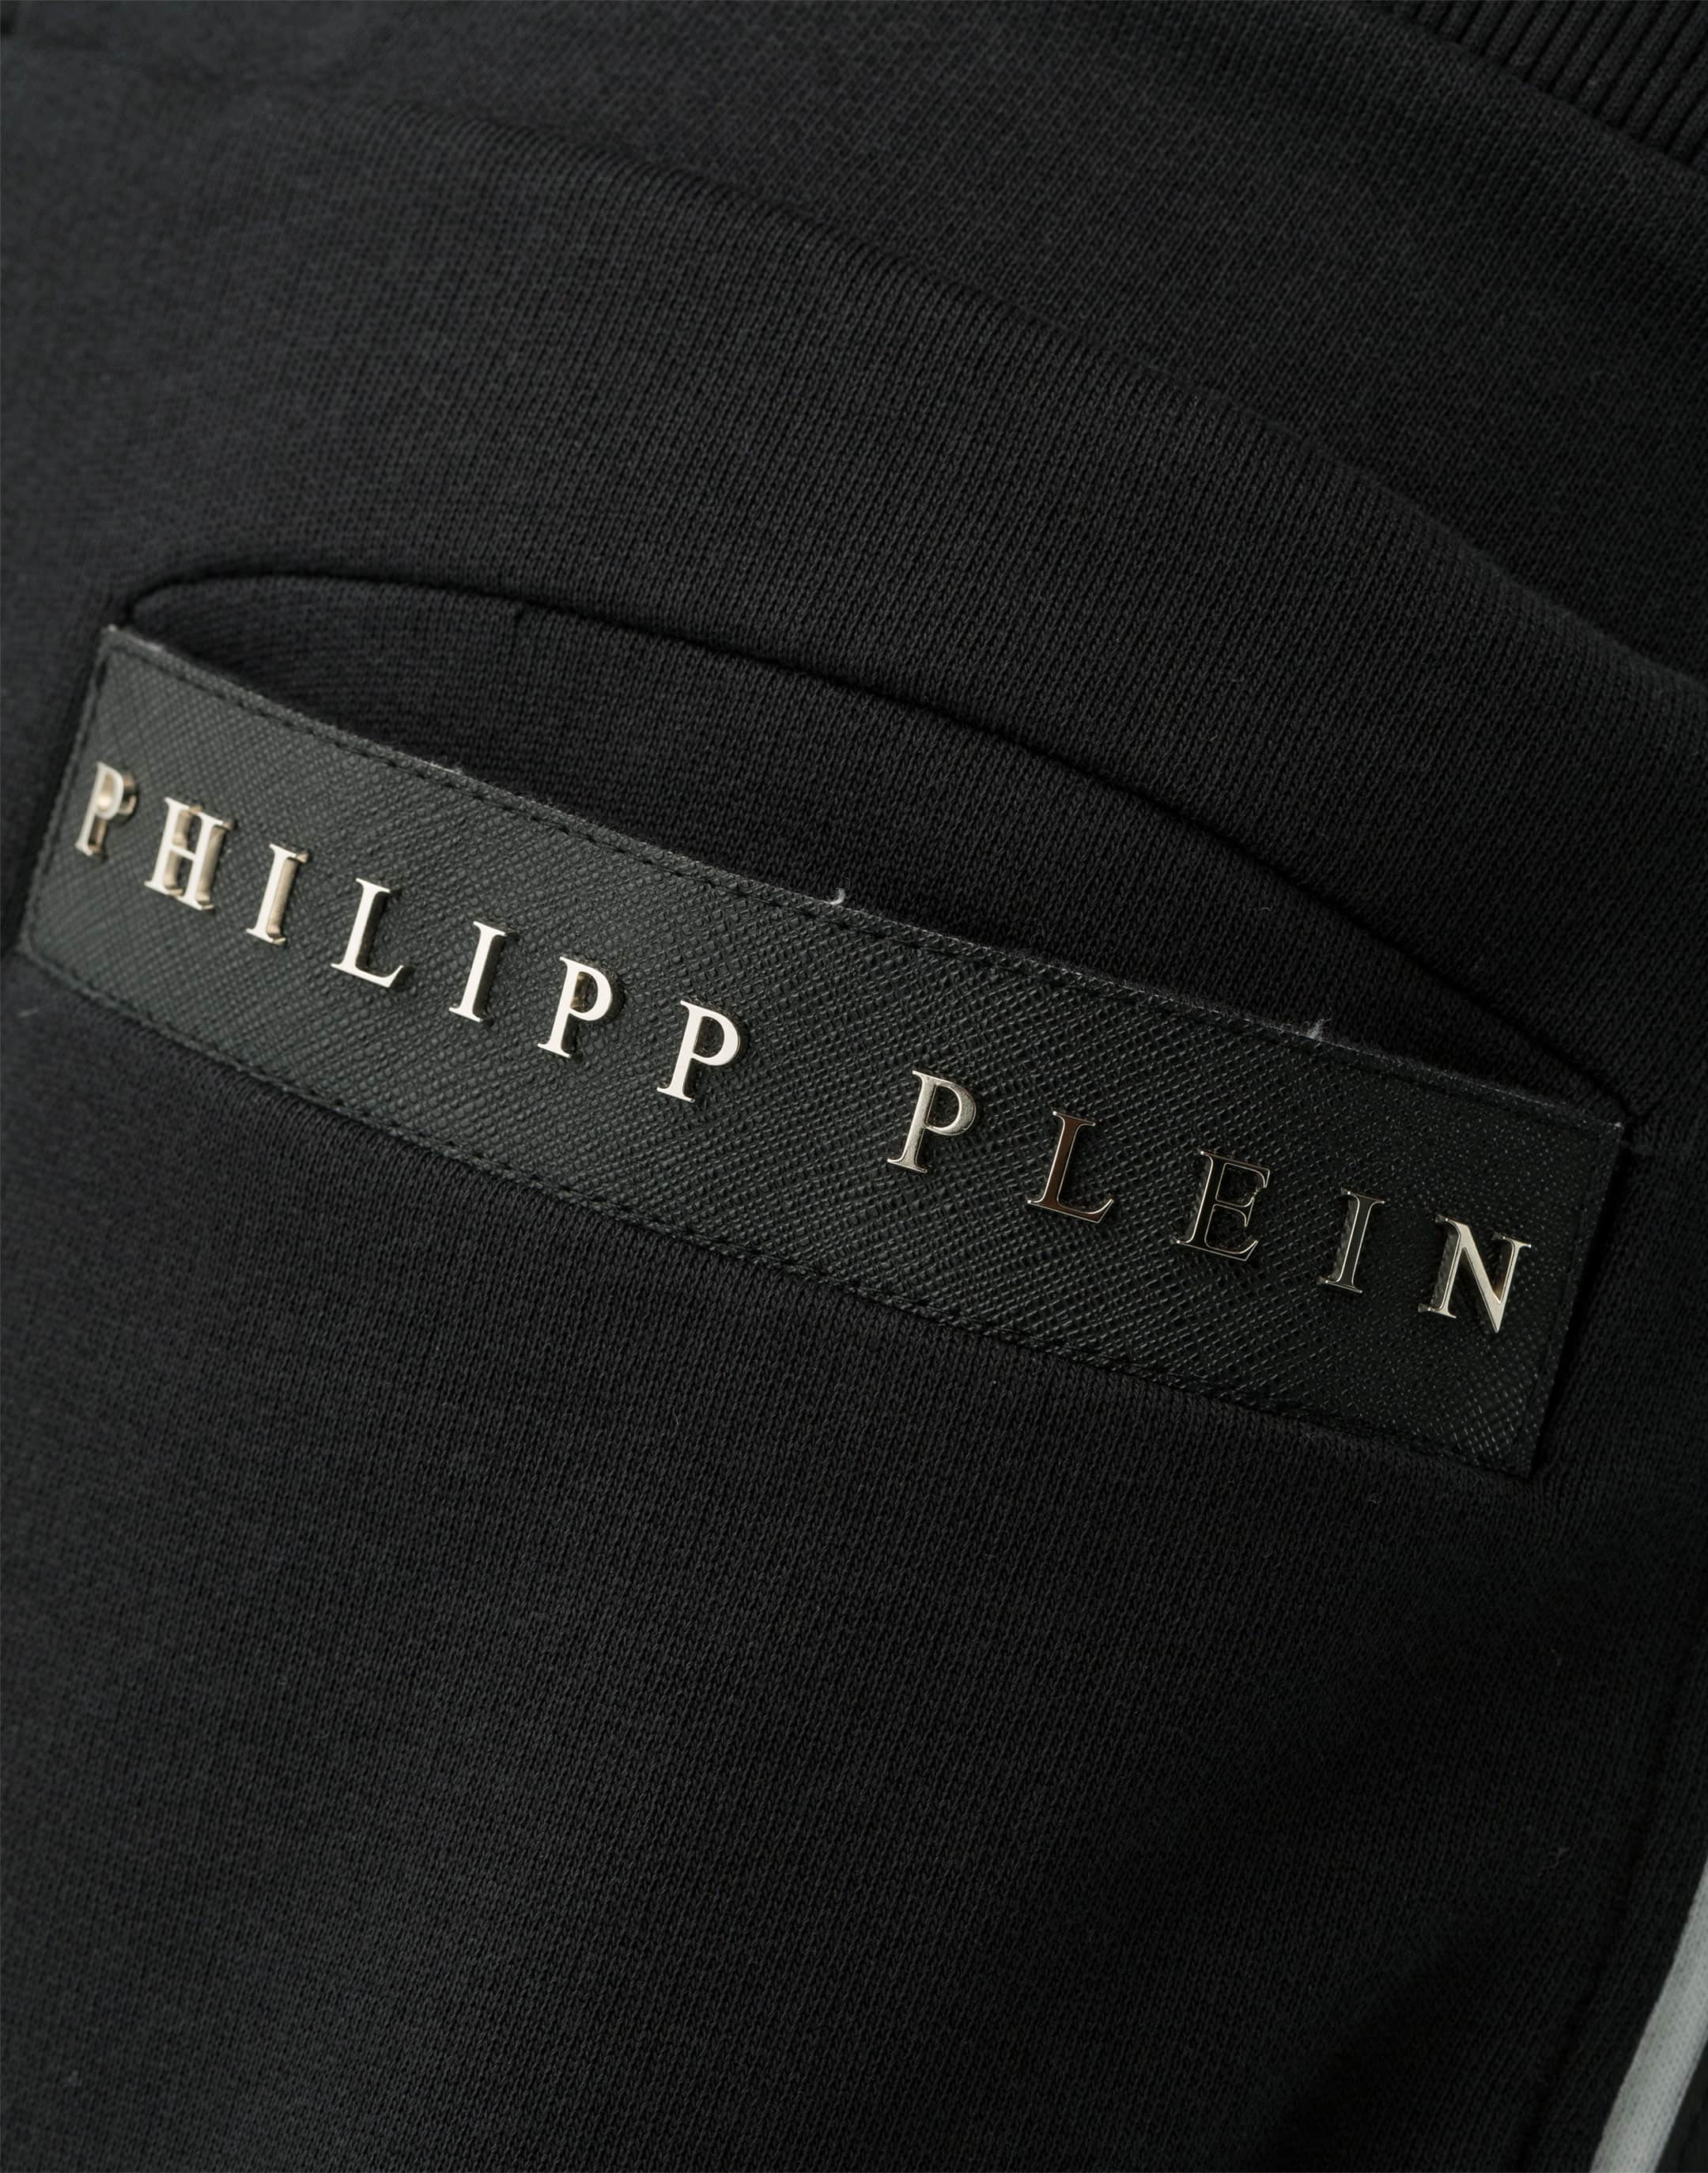 philipp plein replica jacket